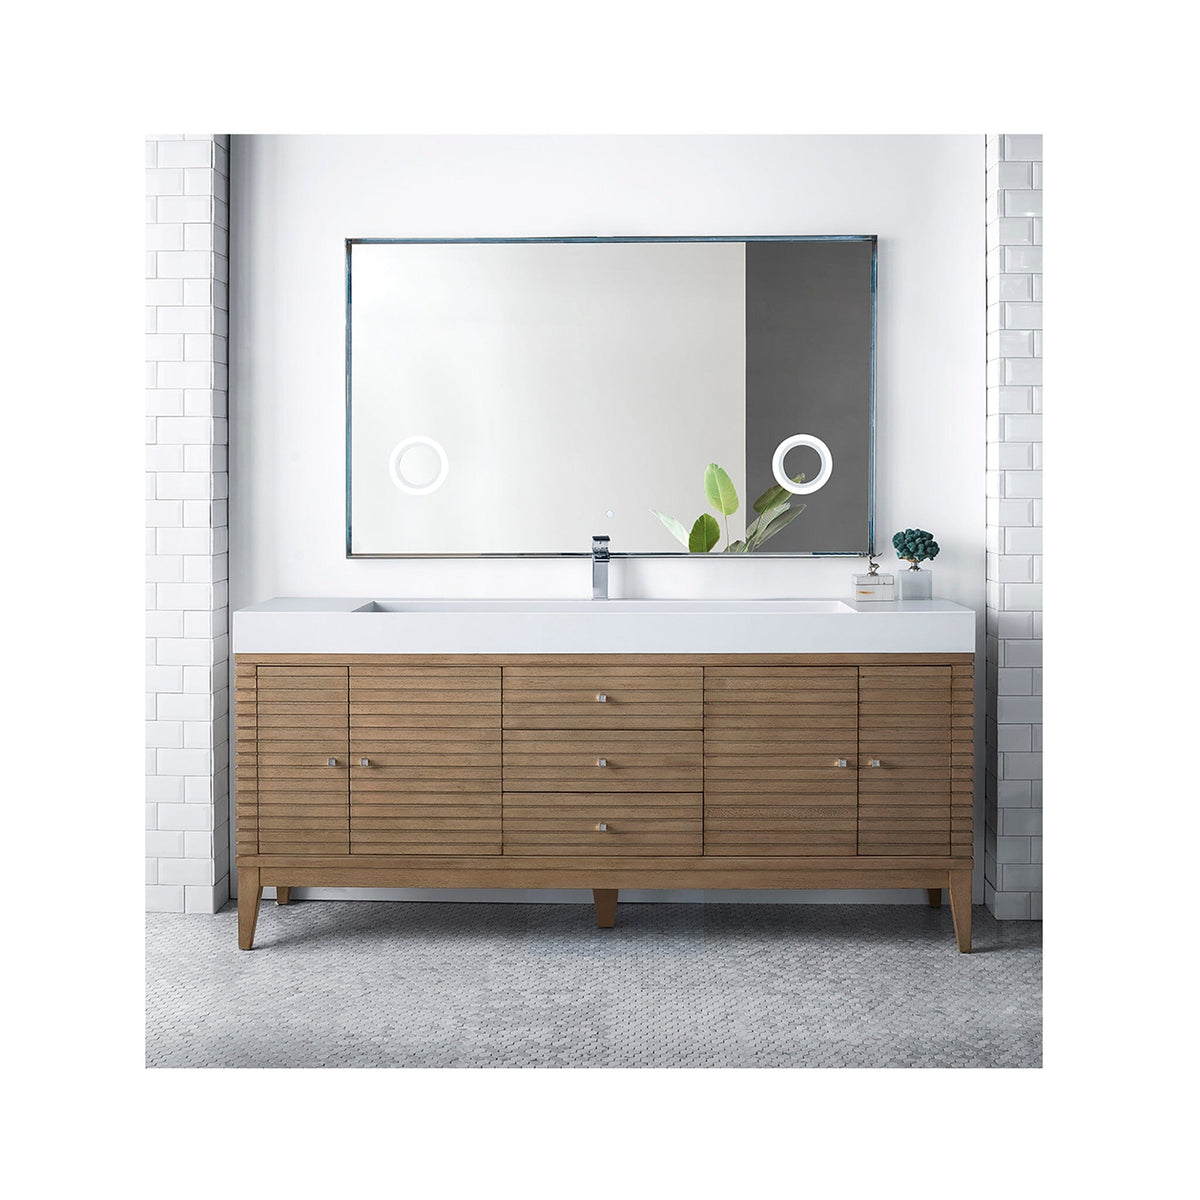 72" Linear Single Bathroom Vanity, Whitewashed Walnut